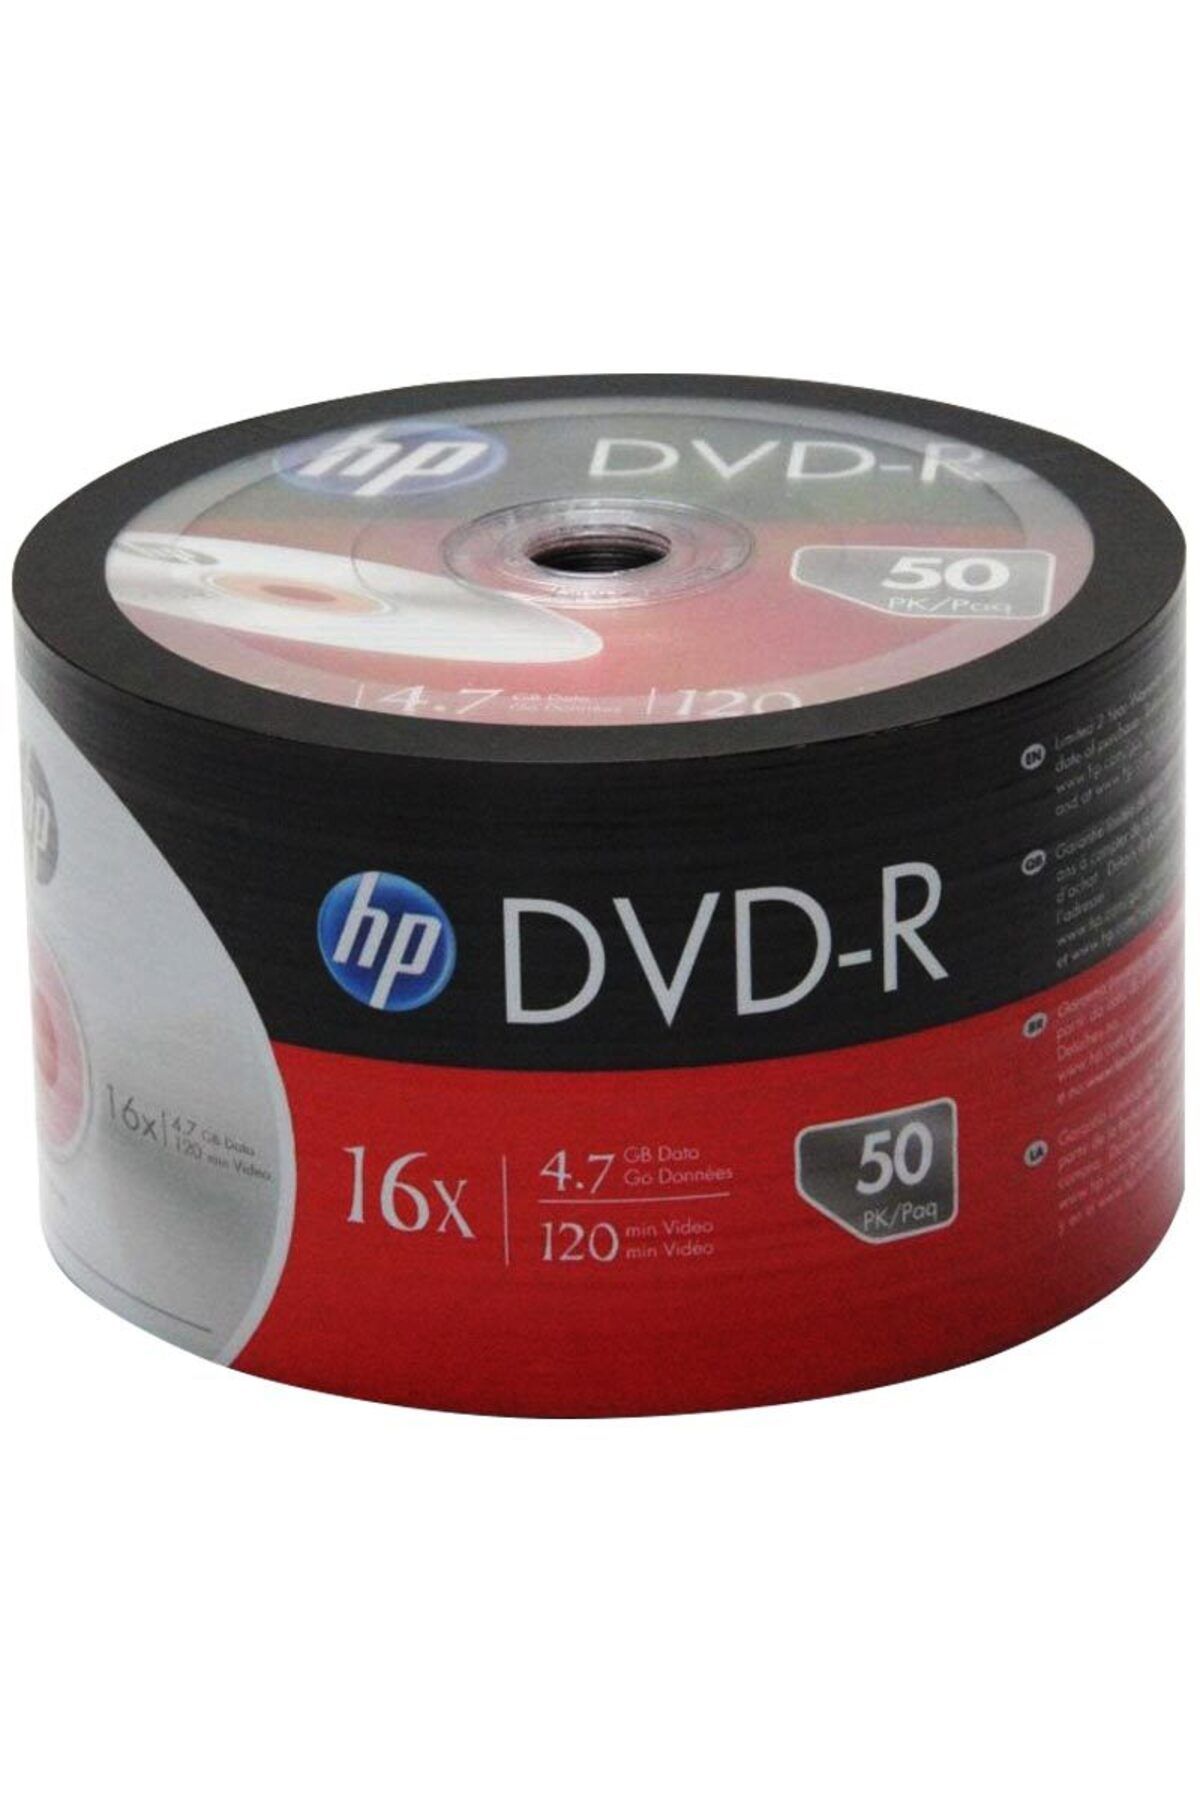 NZM TİCARET HP DME00070-3 DVD-R 4.7 GB 120 MİN 16X 50Lİ PAKET FİYAT